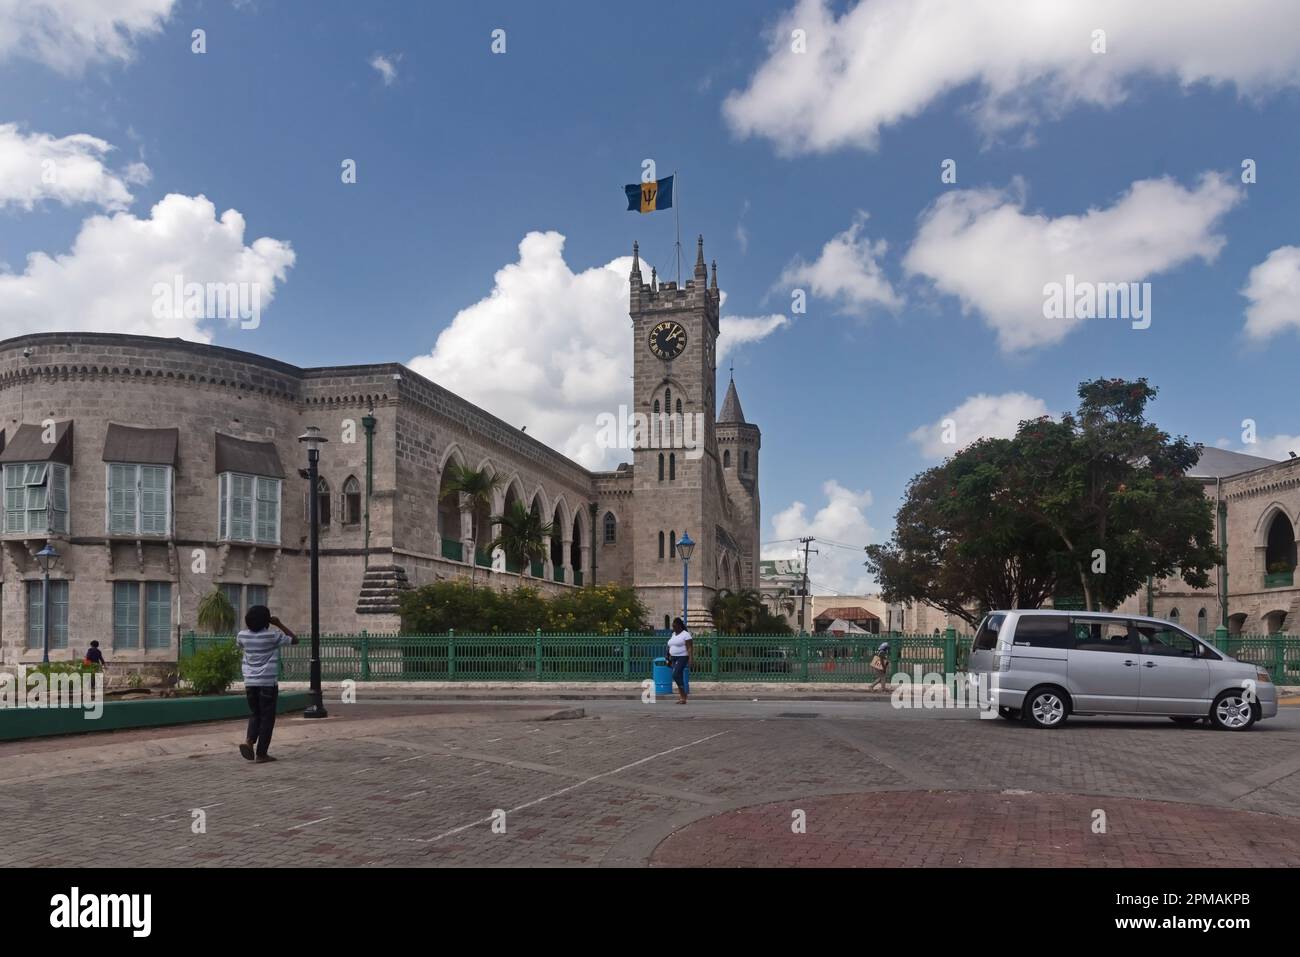 Little Big ben , Torre dell'orologio, Parlamento, Bridgetown, Barbados, Caraibi Foto Stock